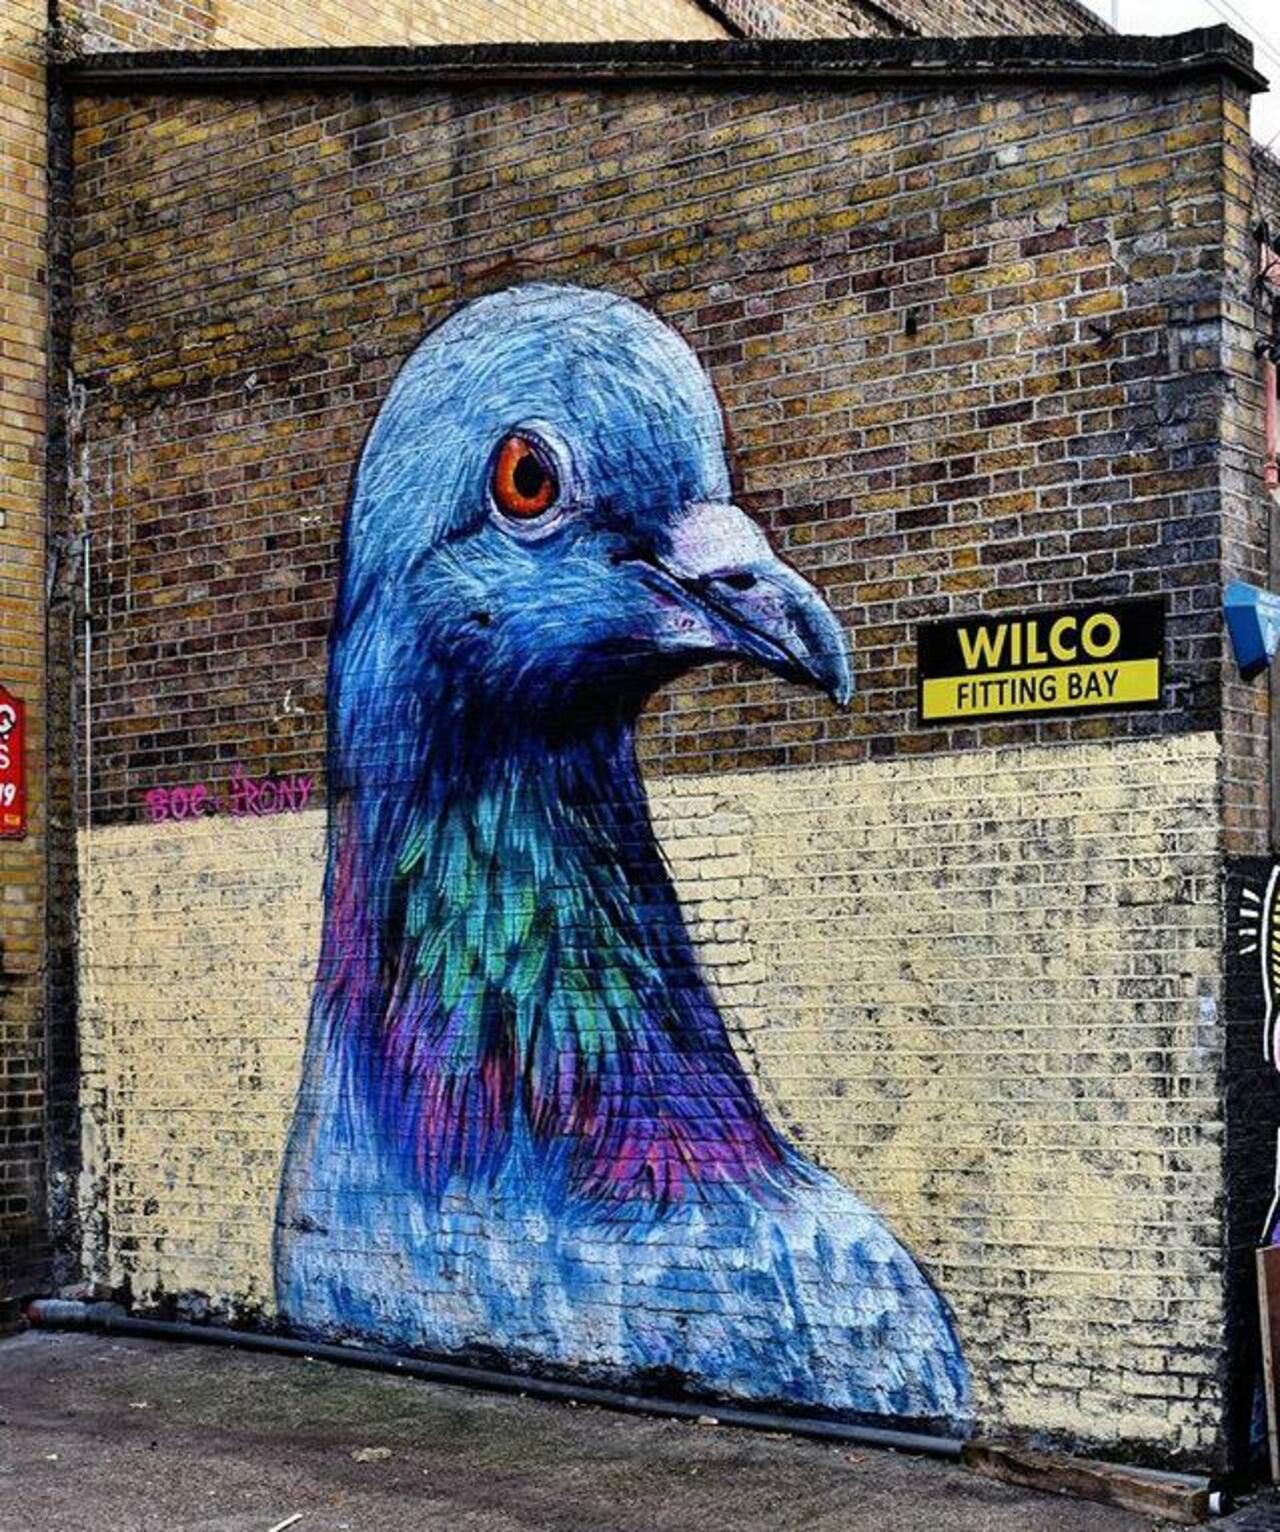 Street Art by Placee Boe & whoamirony in London 

#art #graffiti #mural #streetart http://t.co/xrzzJwFQ25 … … … … http://twitter.com/GoogleStreetArt/status/652357036542414848/photo/1/large?utm_source=fb&utm_medium=fb&utm_campaign=charlesjackso14&utm_content=652360892974276609